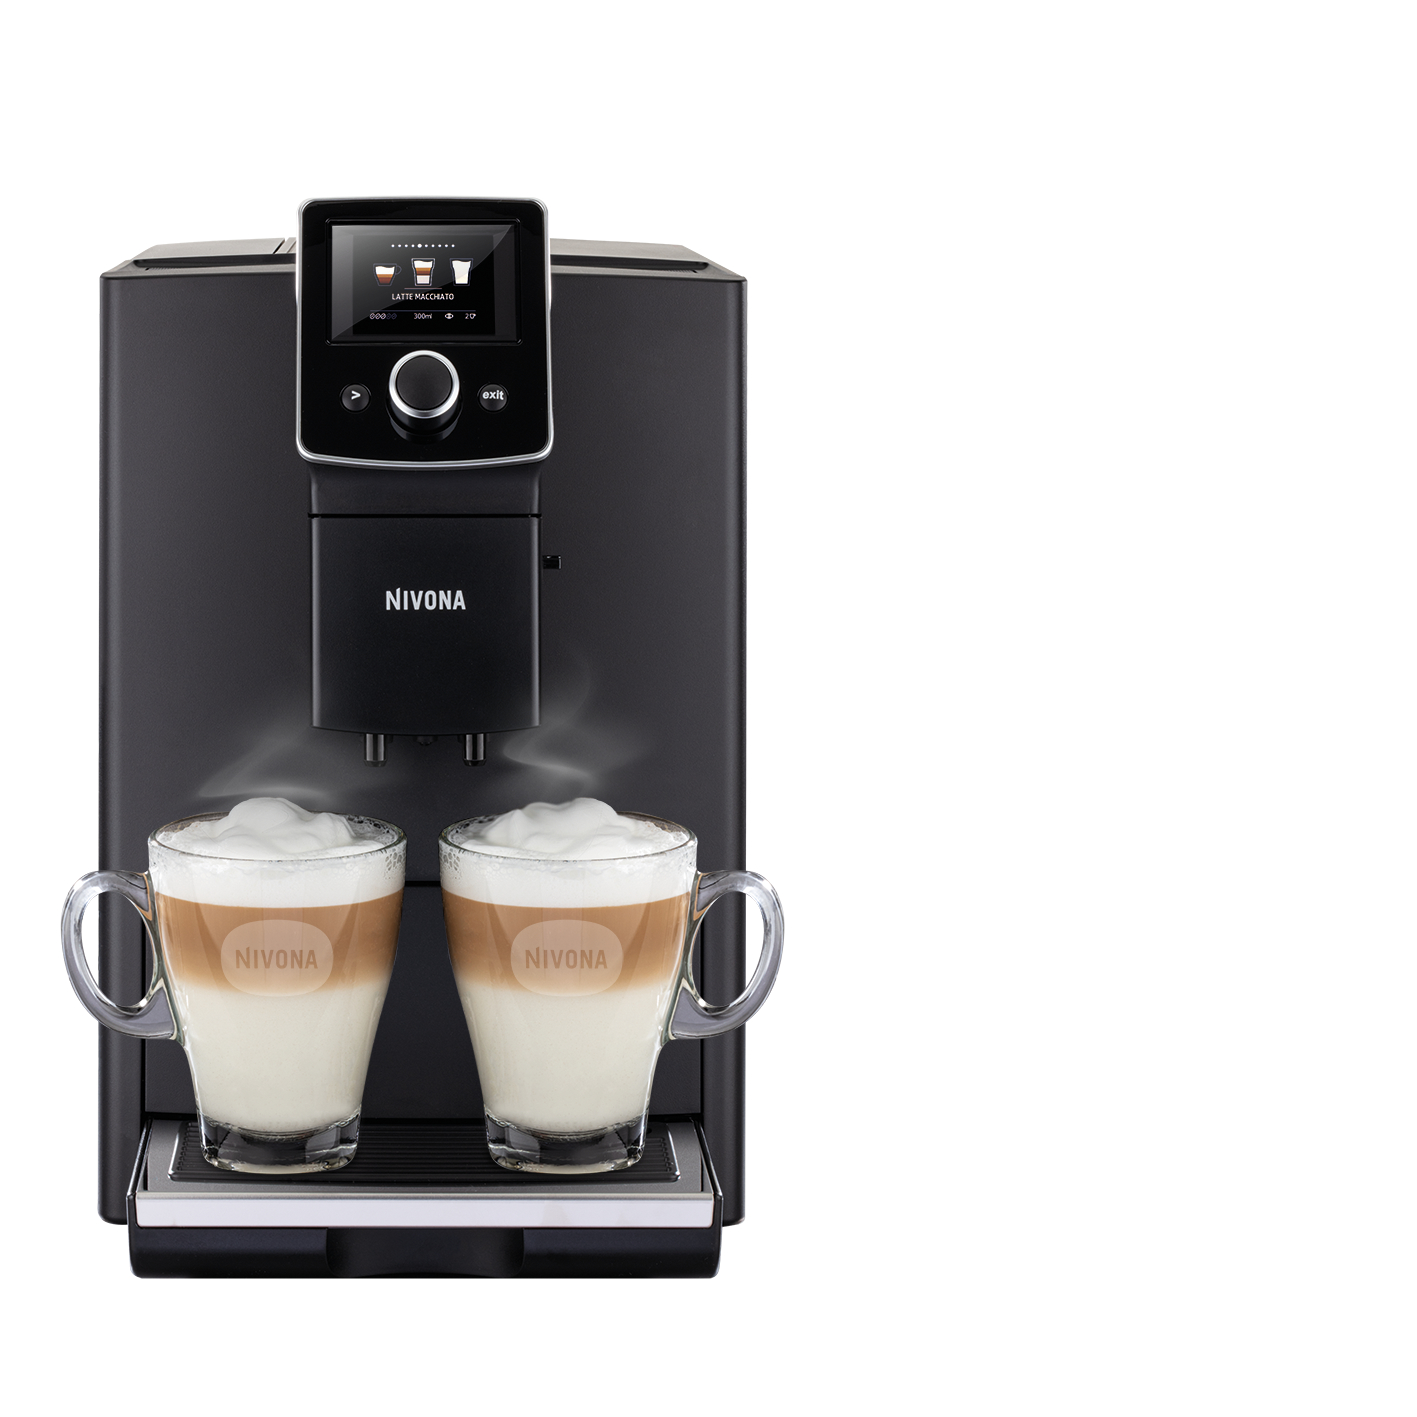 NIVONA Kaffeevollautomat CafeRomatica 8er NICR 820 Mattschwarz / Chrom